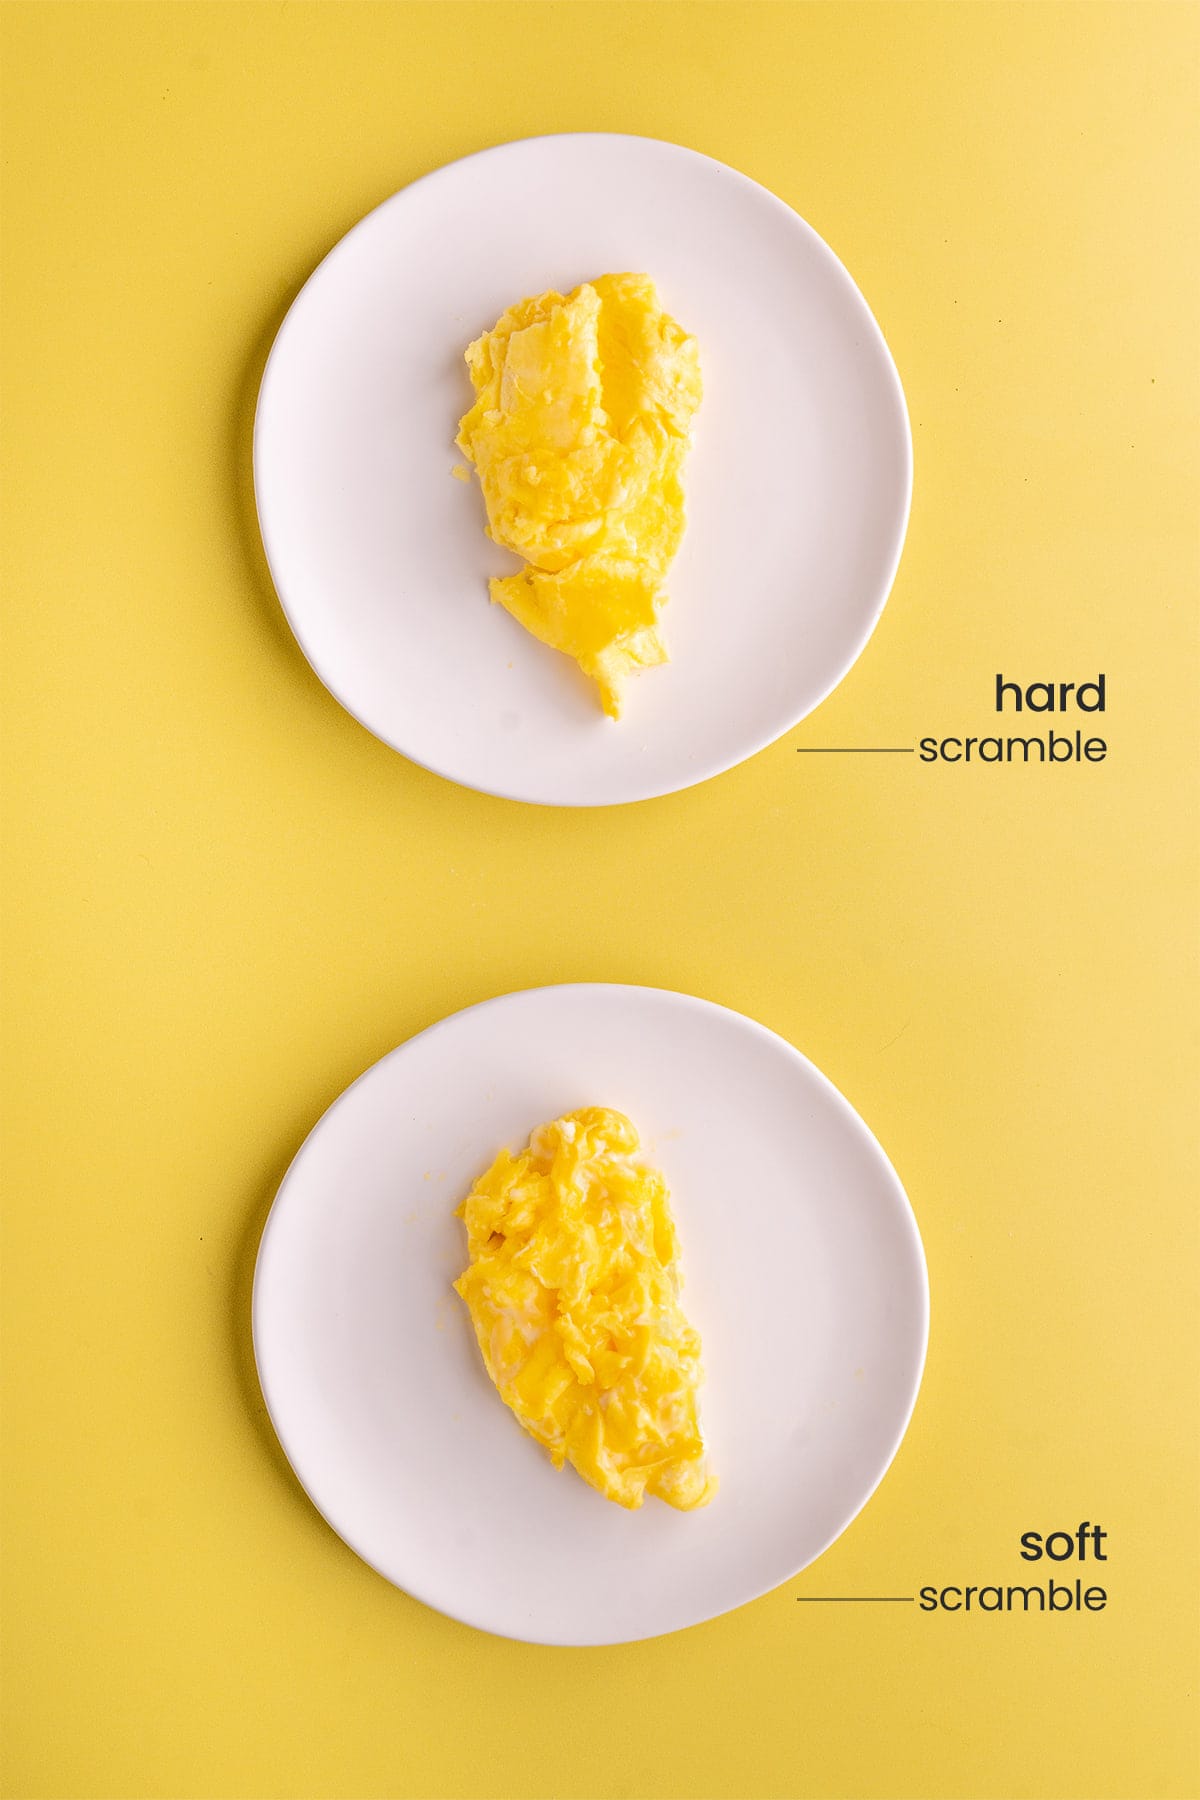 Hard scrambled eggs vs soft scrambled eggs